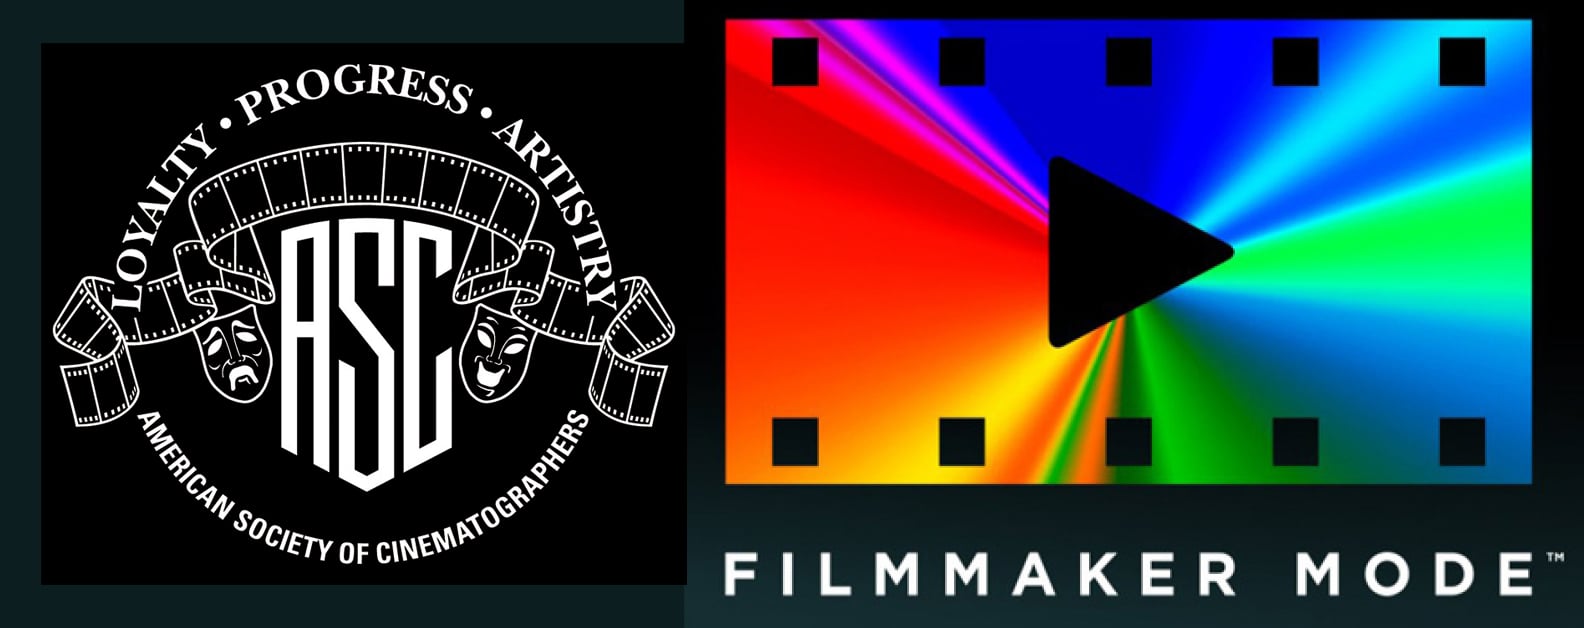 Filmmaker Mode Logo Asc